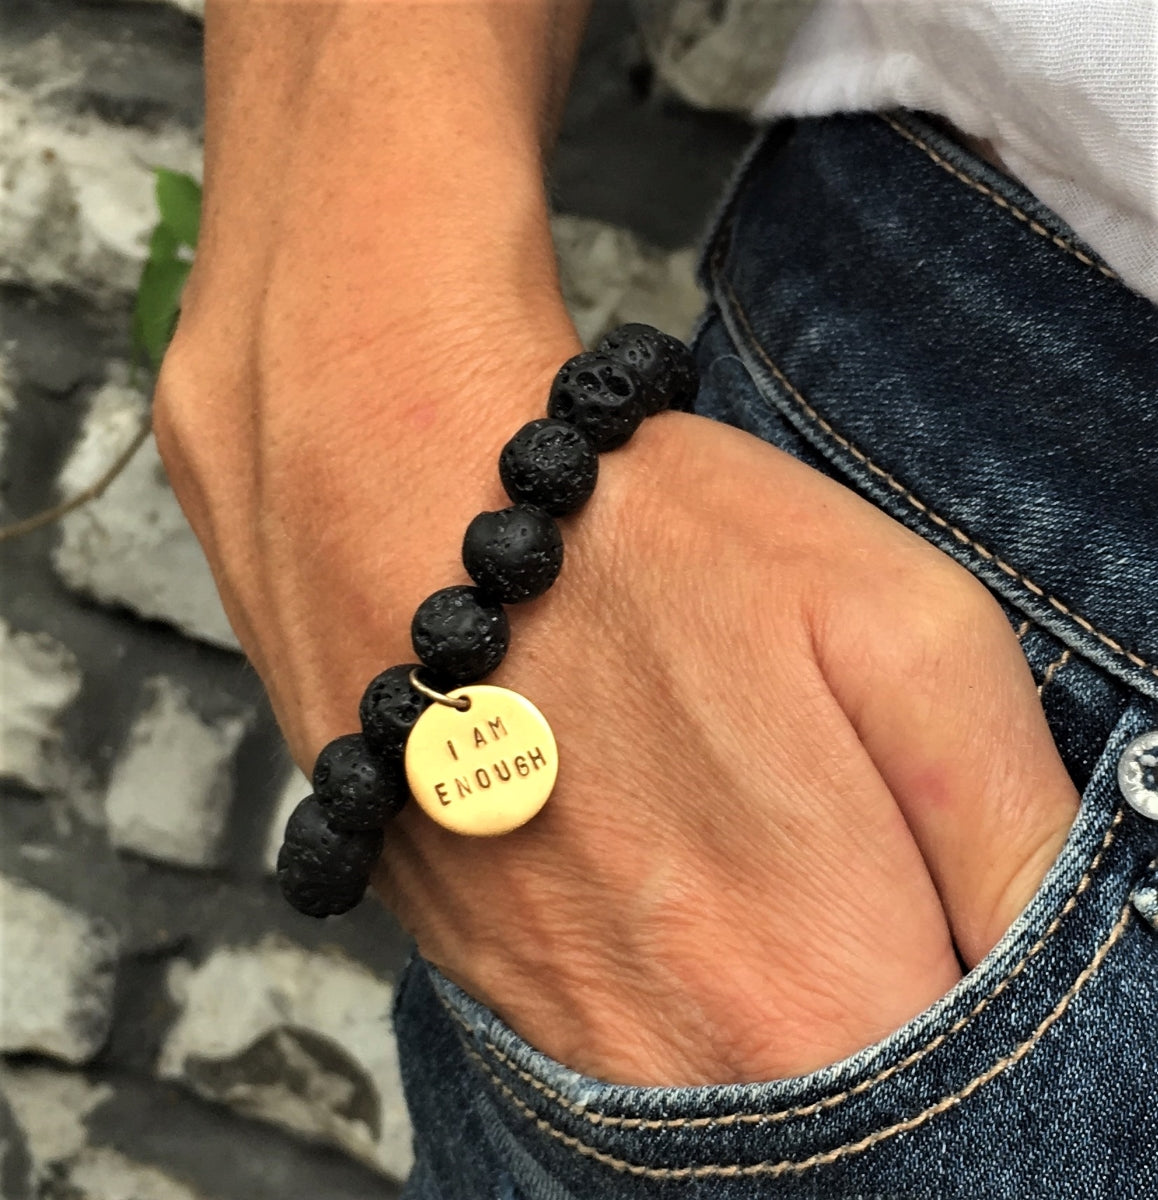 I am Enough - Gold Affirmation Bracelet with Lava Stone